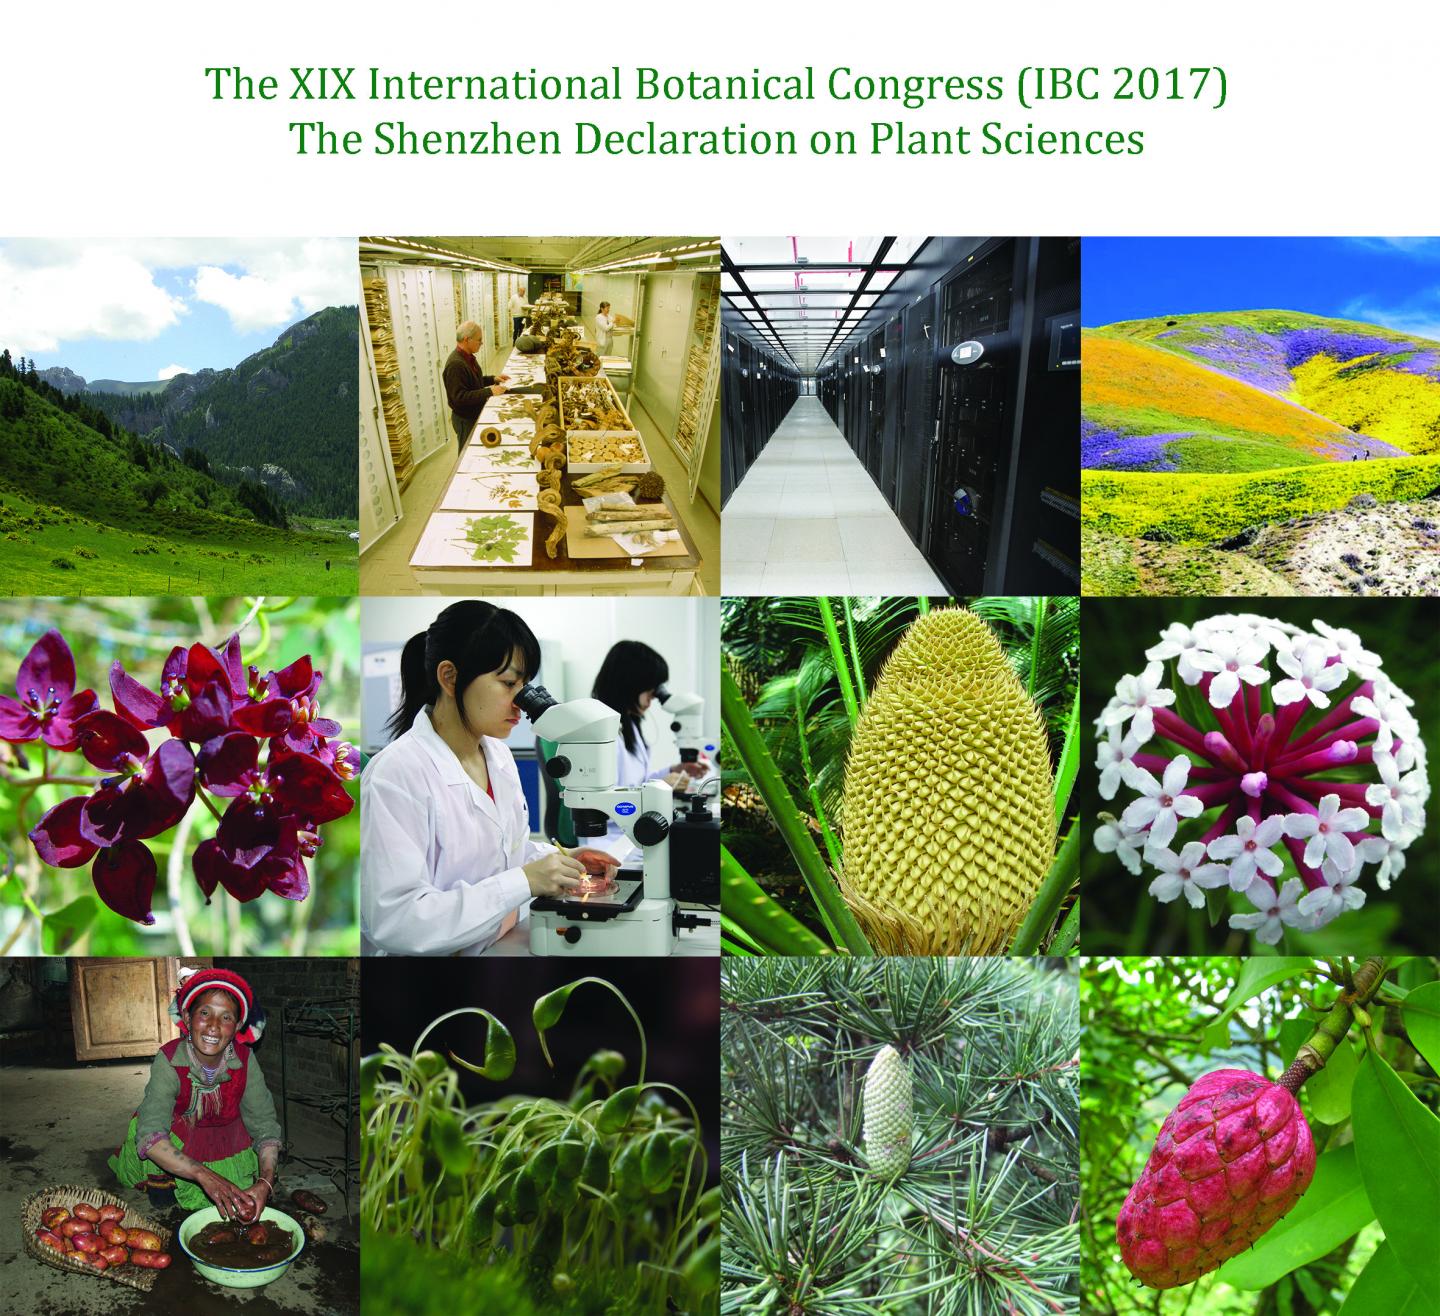 The Shenzhen Declaration for Plant Sciences